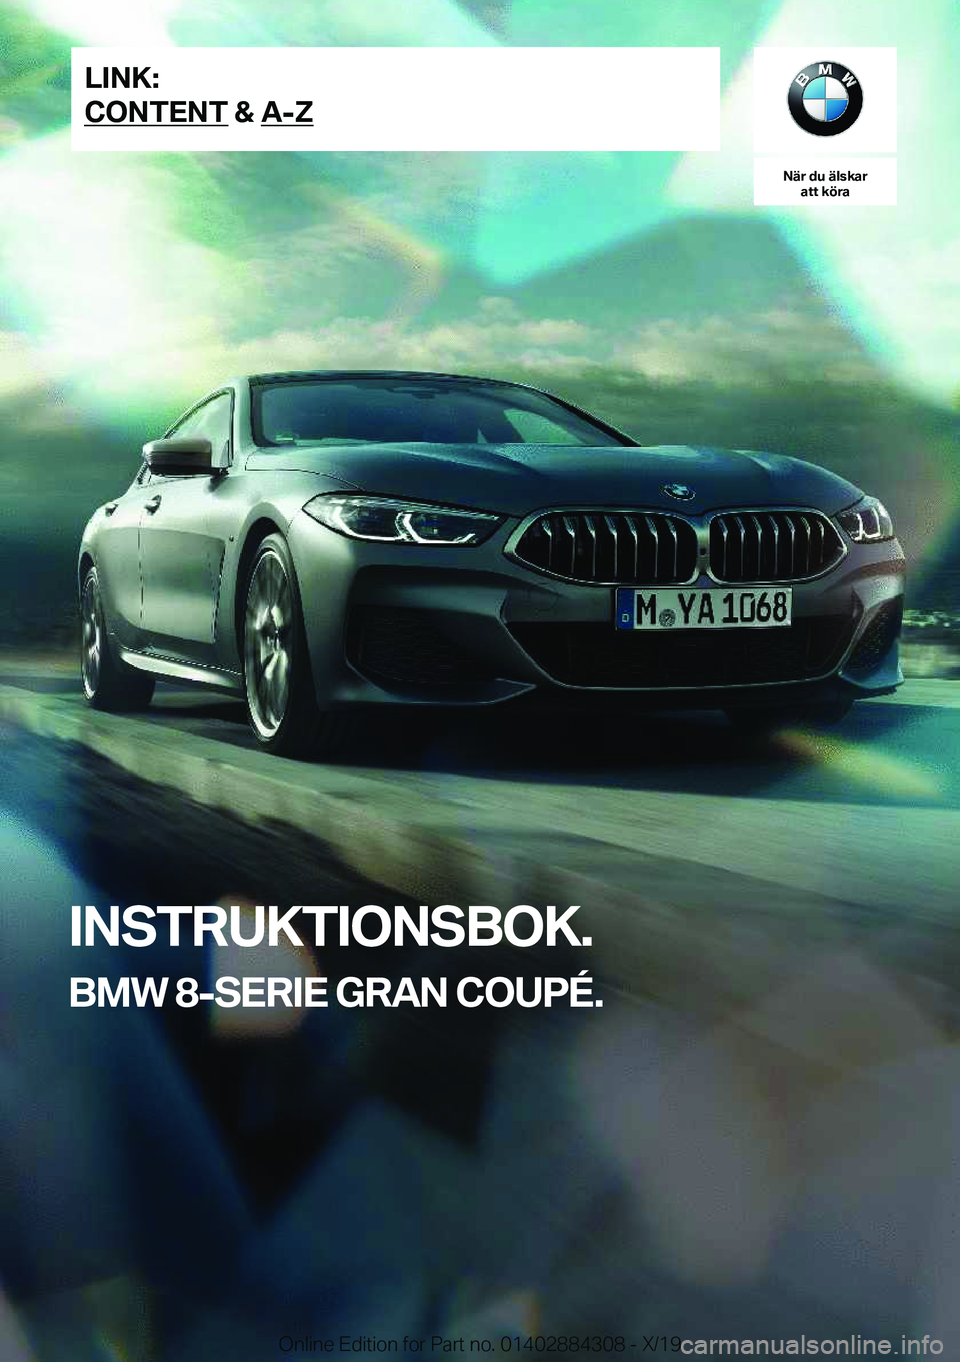 BMW 8 SERIES GRAN COUPE 2020  InstruktionsbÖcker (in Swedish) �N�ä�r��d�u��ä�l�s�k�a�r�a�t�t��k�